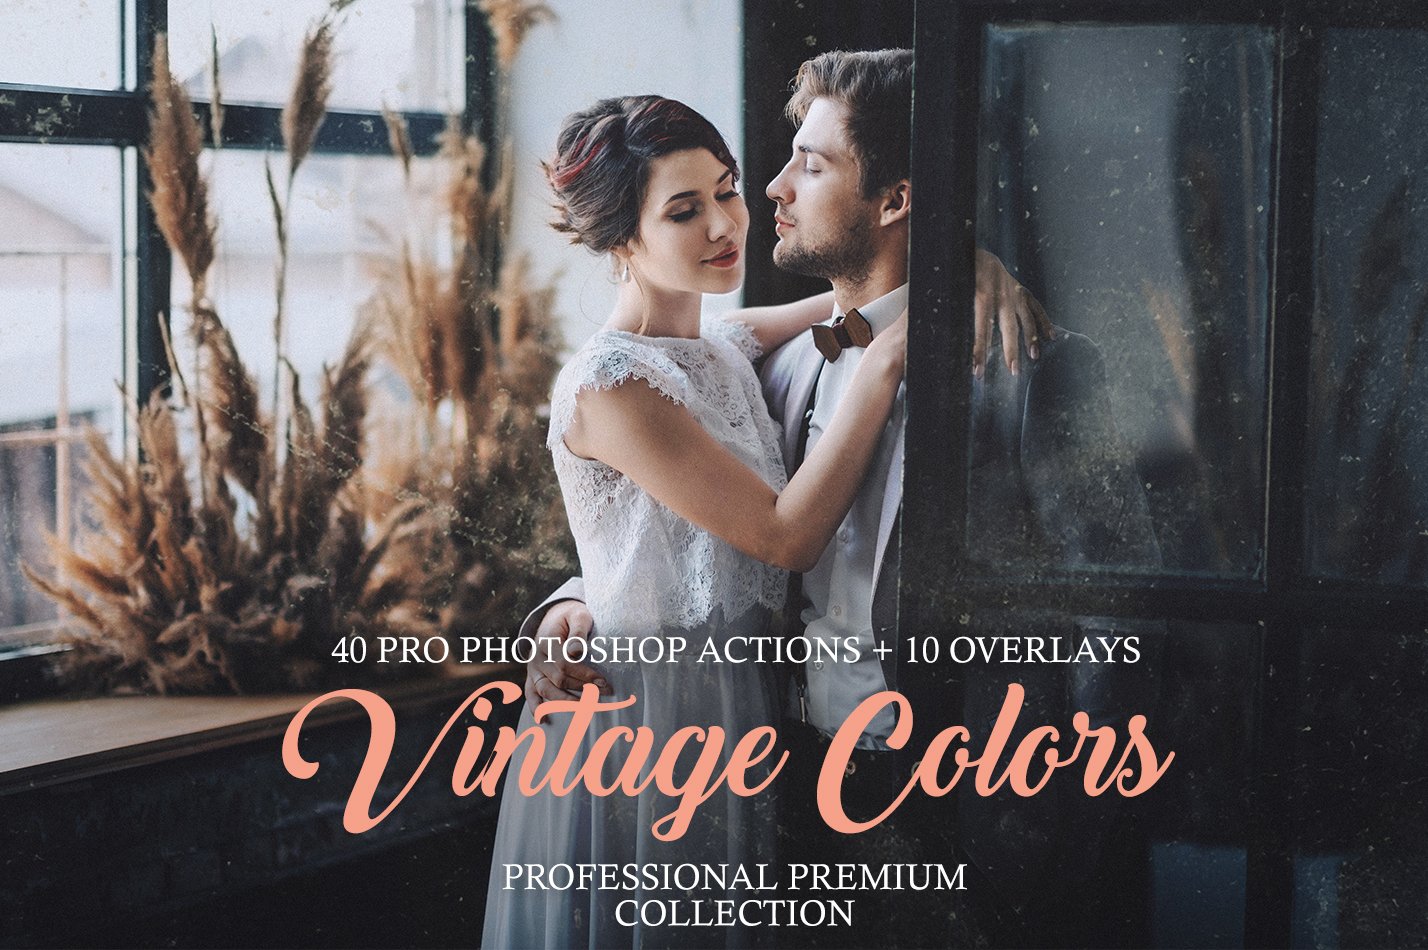 Vintage Colors Photoshop Actionscover image.